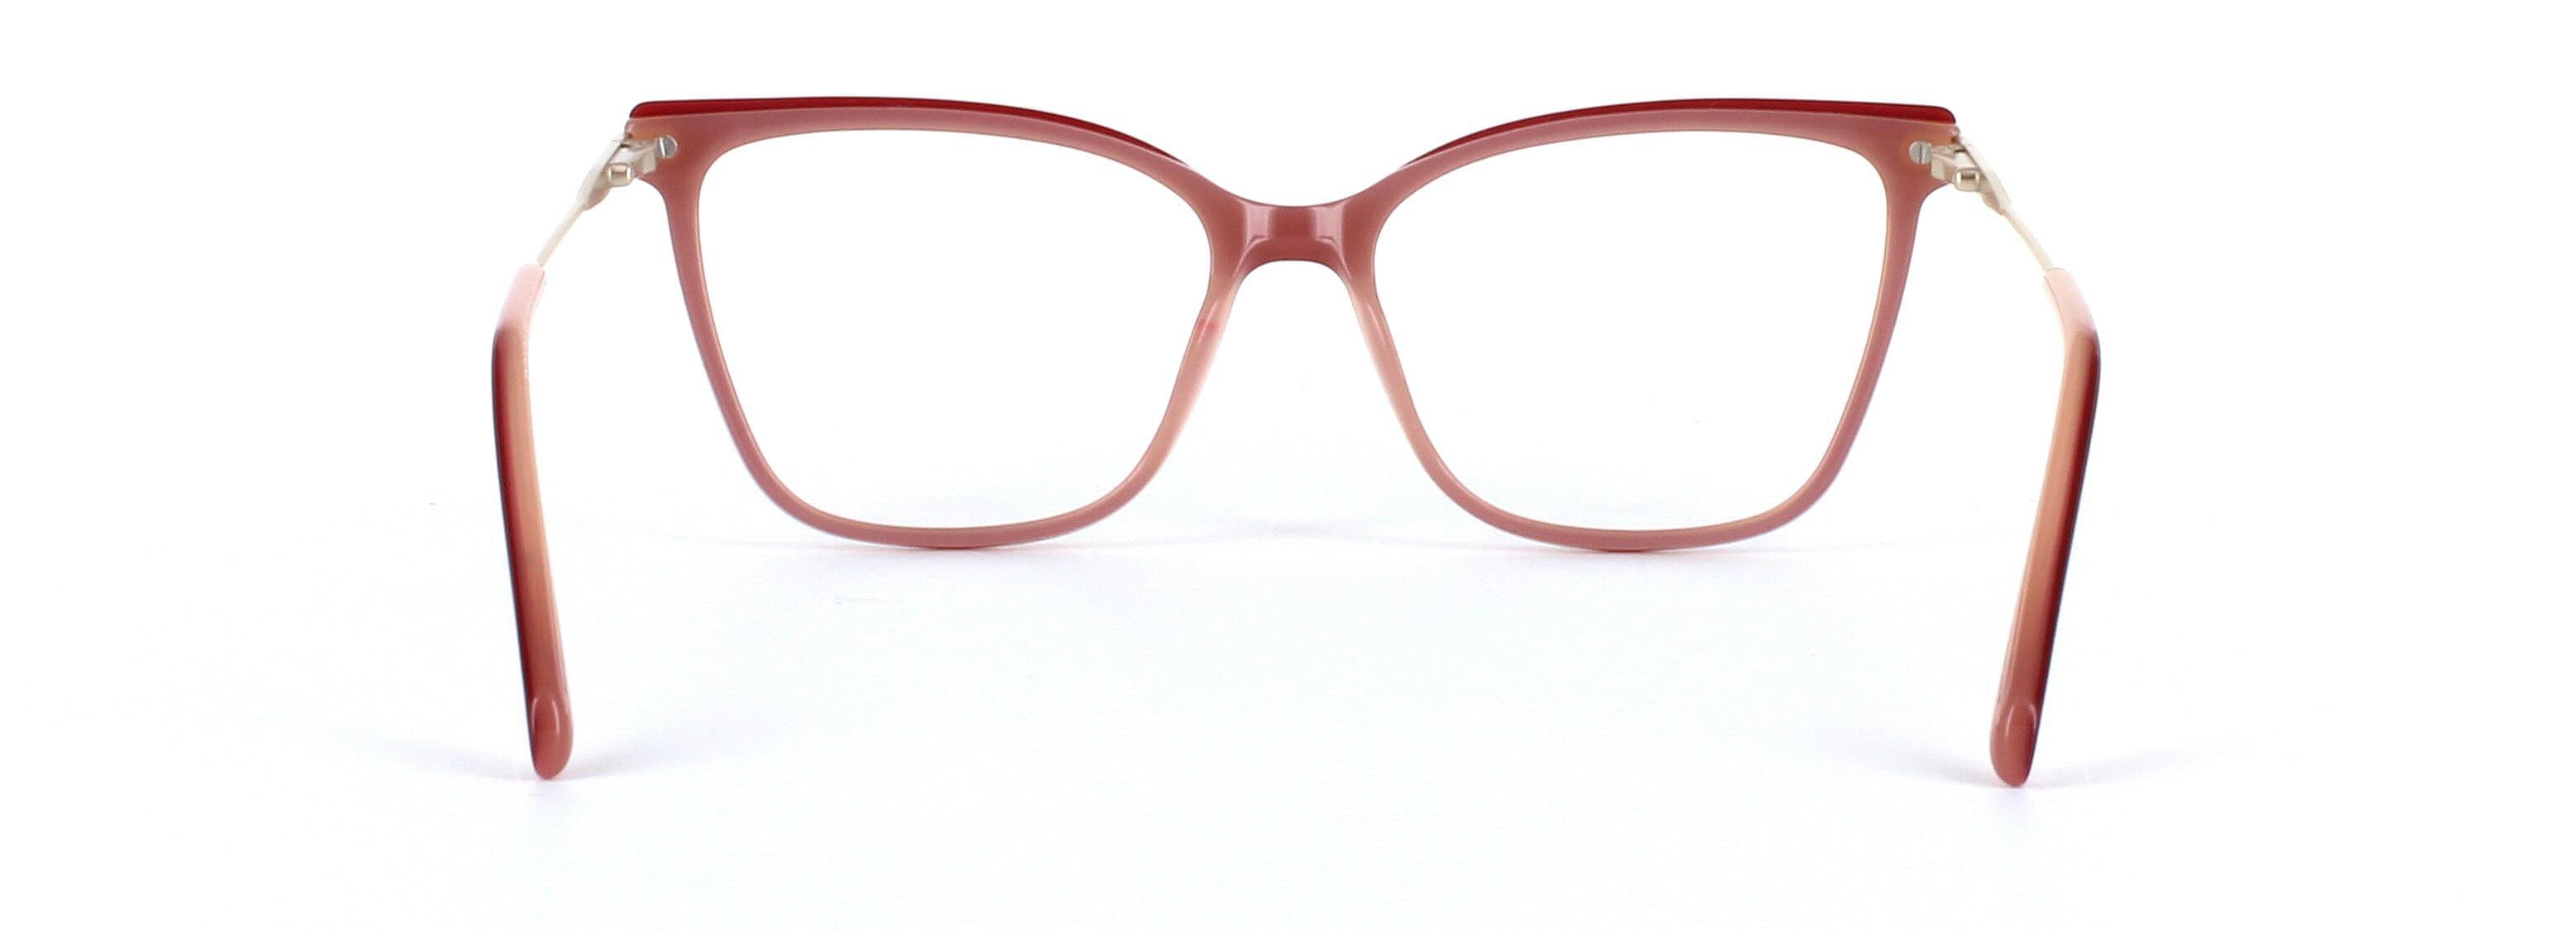 Harleigh Red Full Rim Square Acetate Glasses - Image View 3